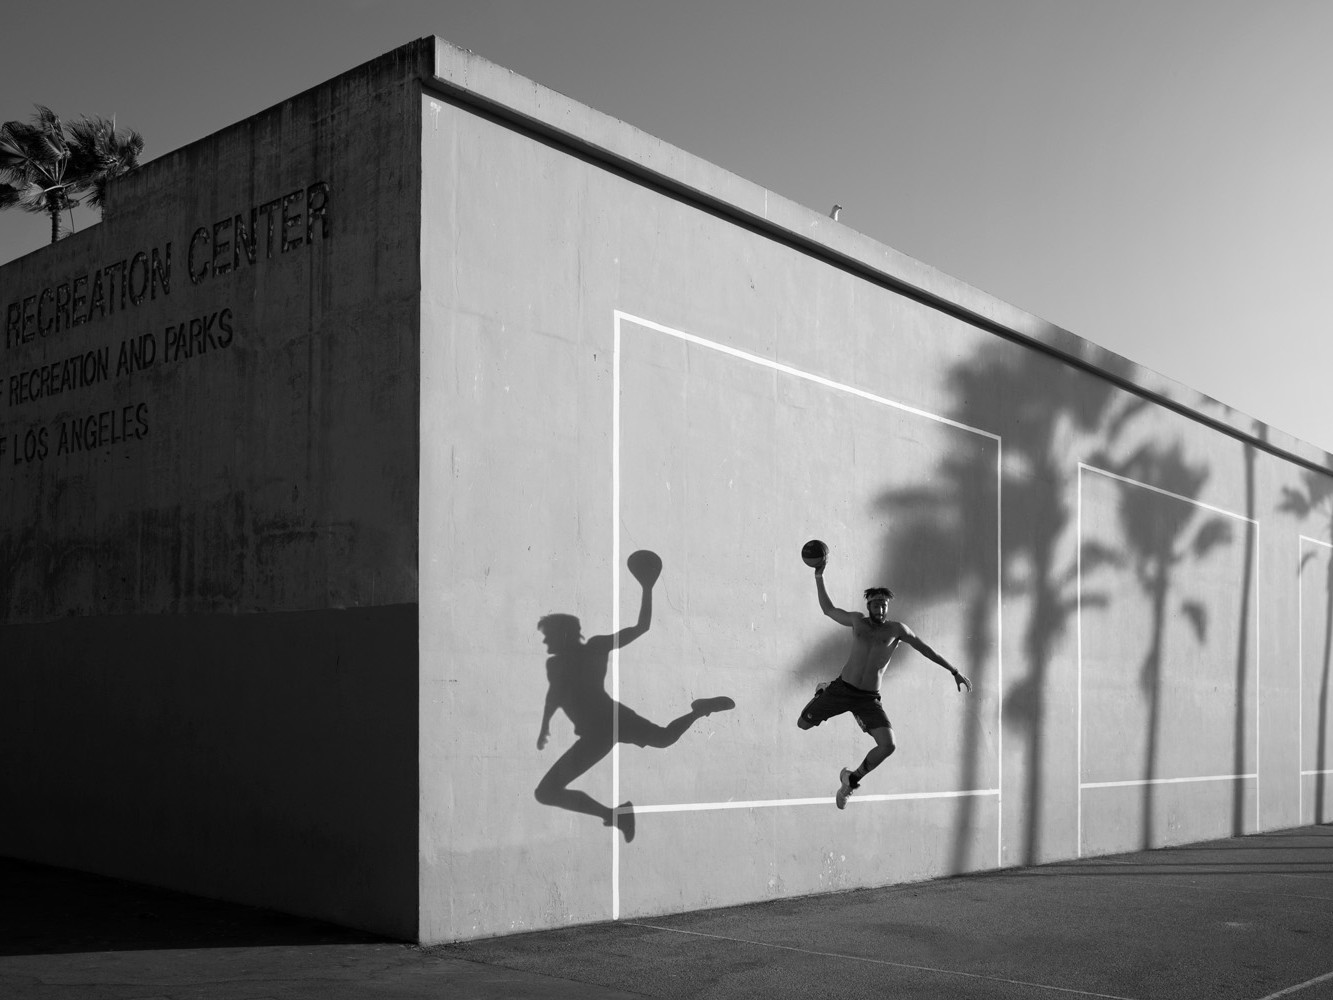 Basketteurs de rue - Veniceball © Maximilian Baier